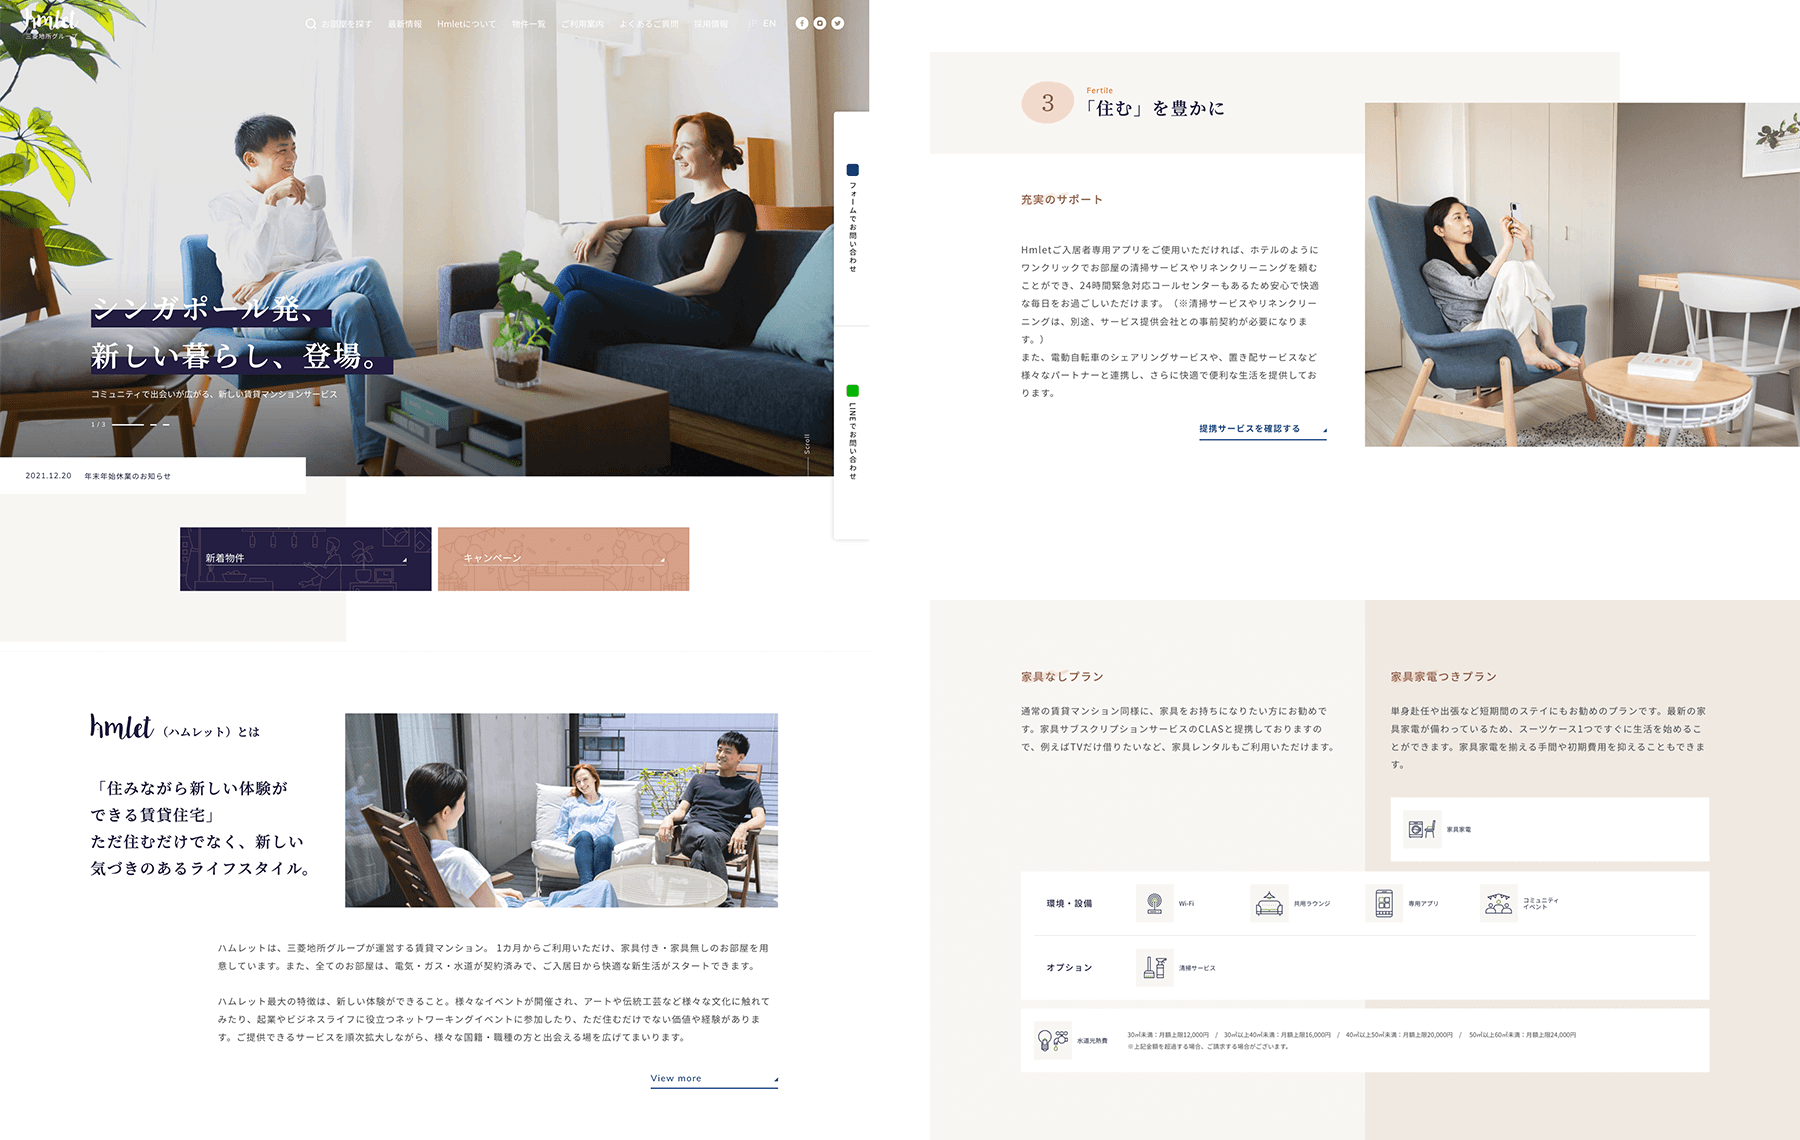 Hmlet Japan / Brand Website